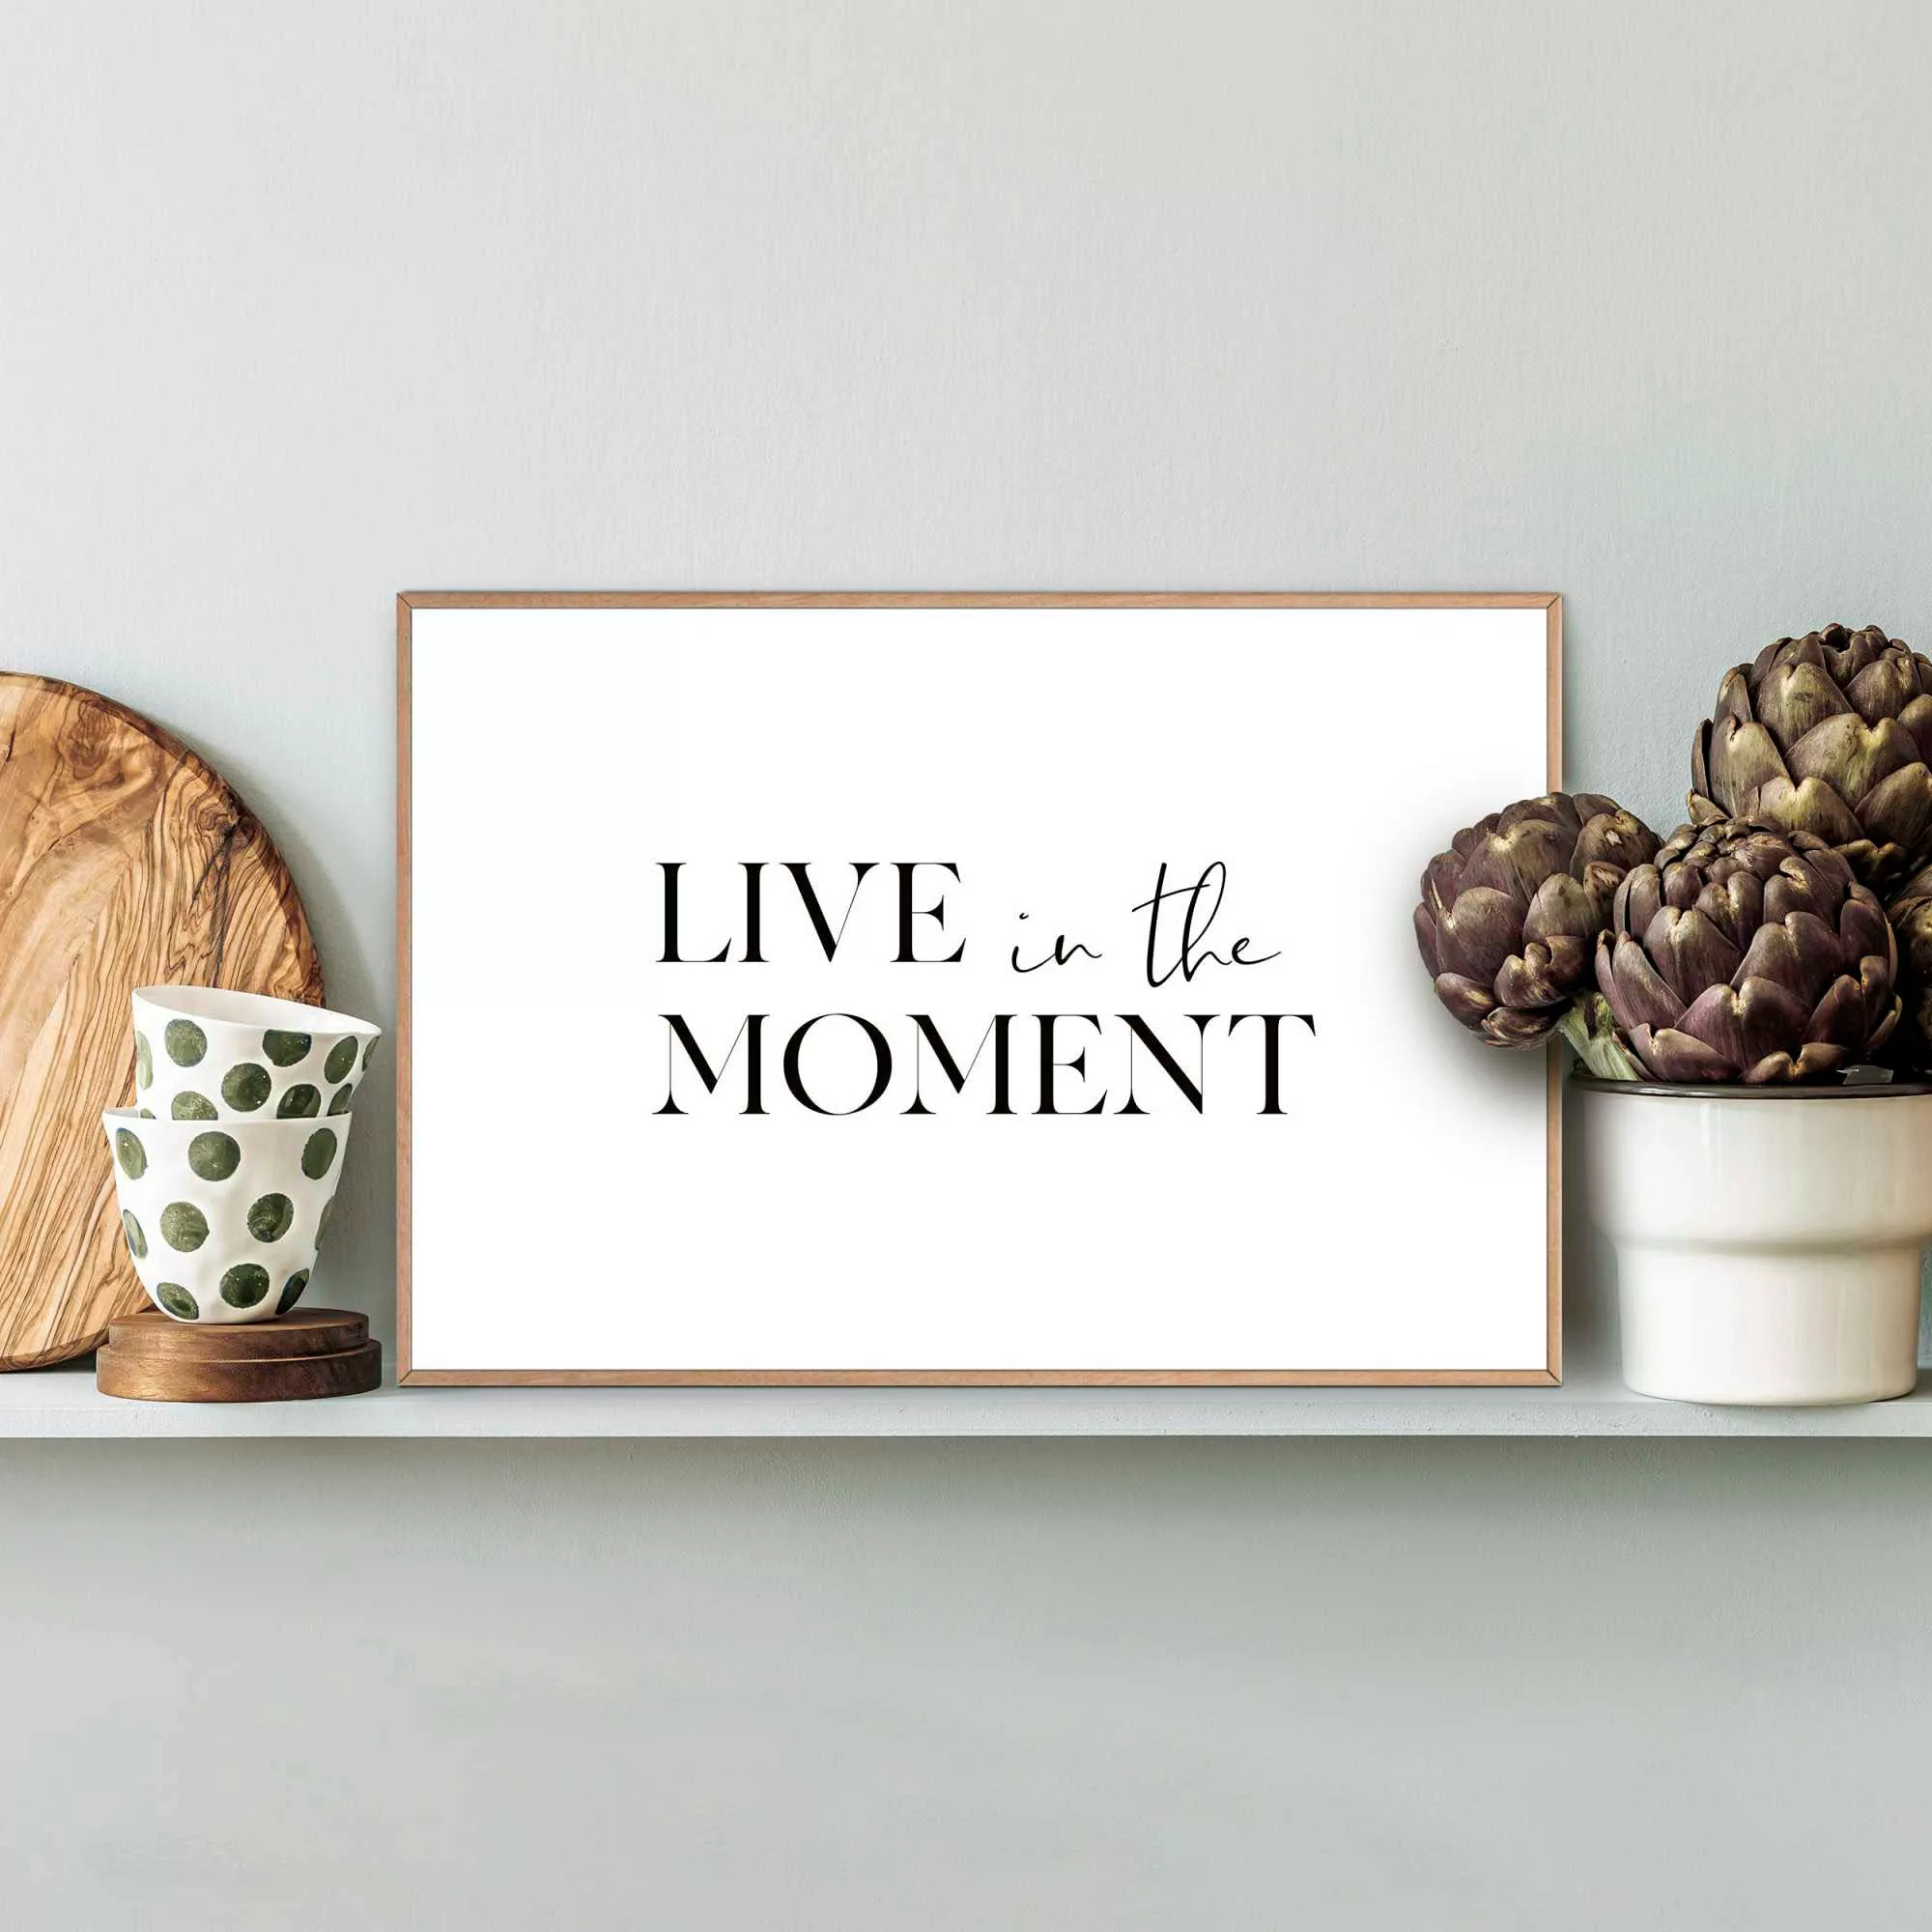 Reinders Poster "Live in the Moment" günstig online kaufen